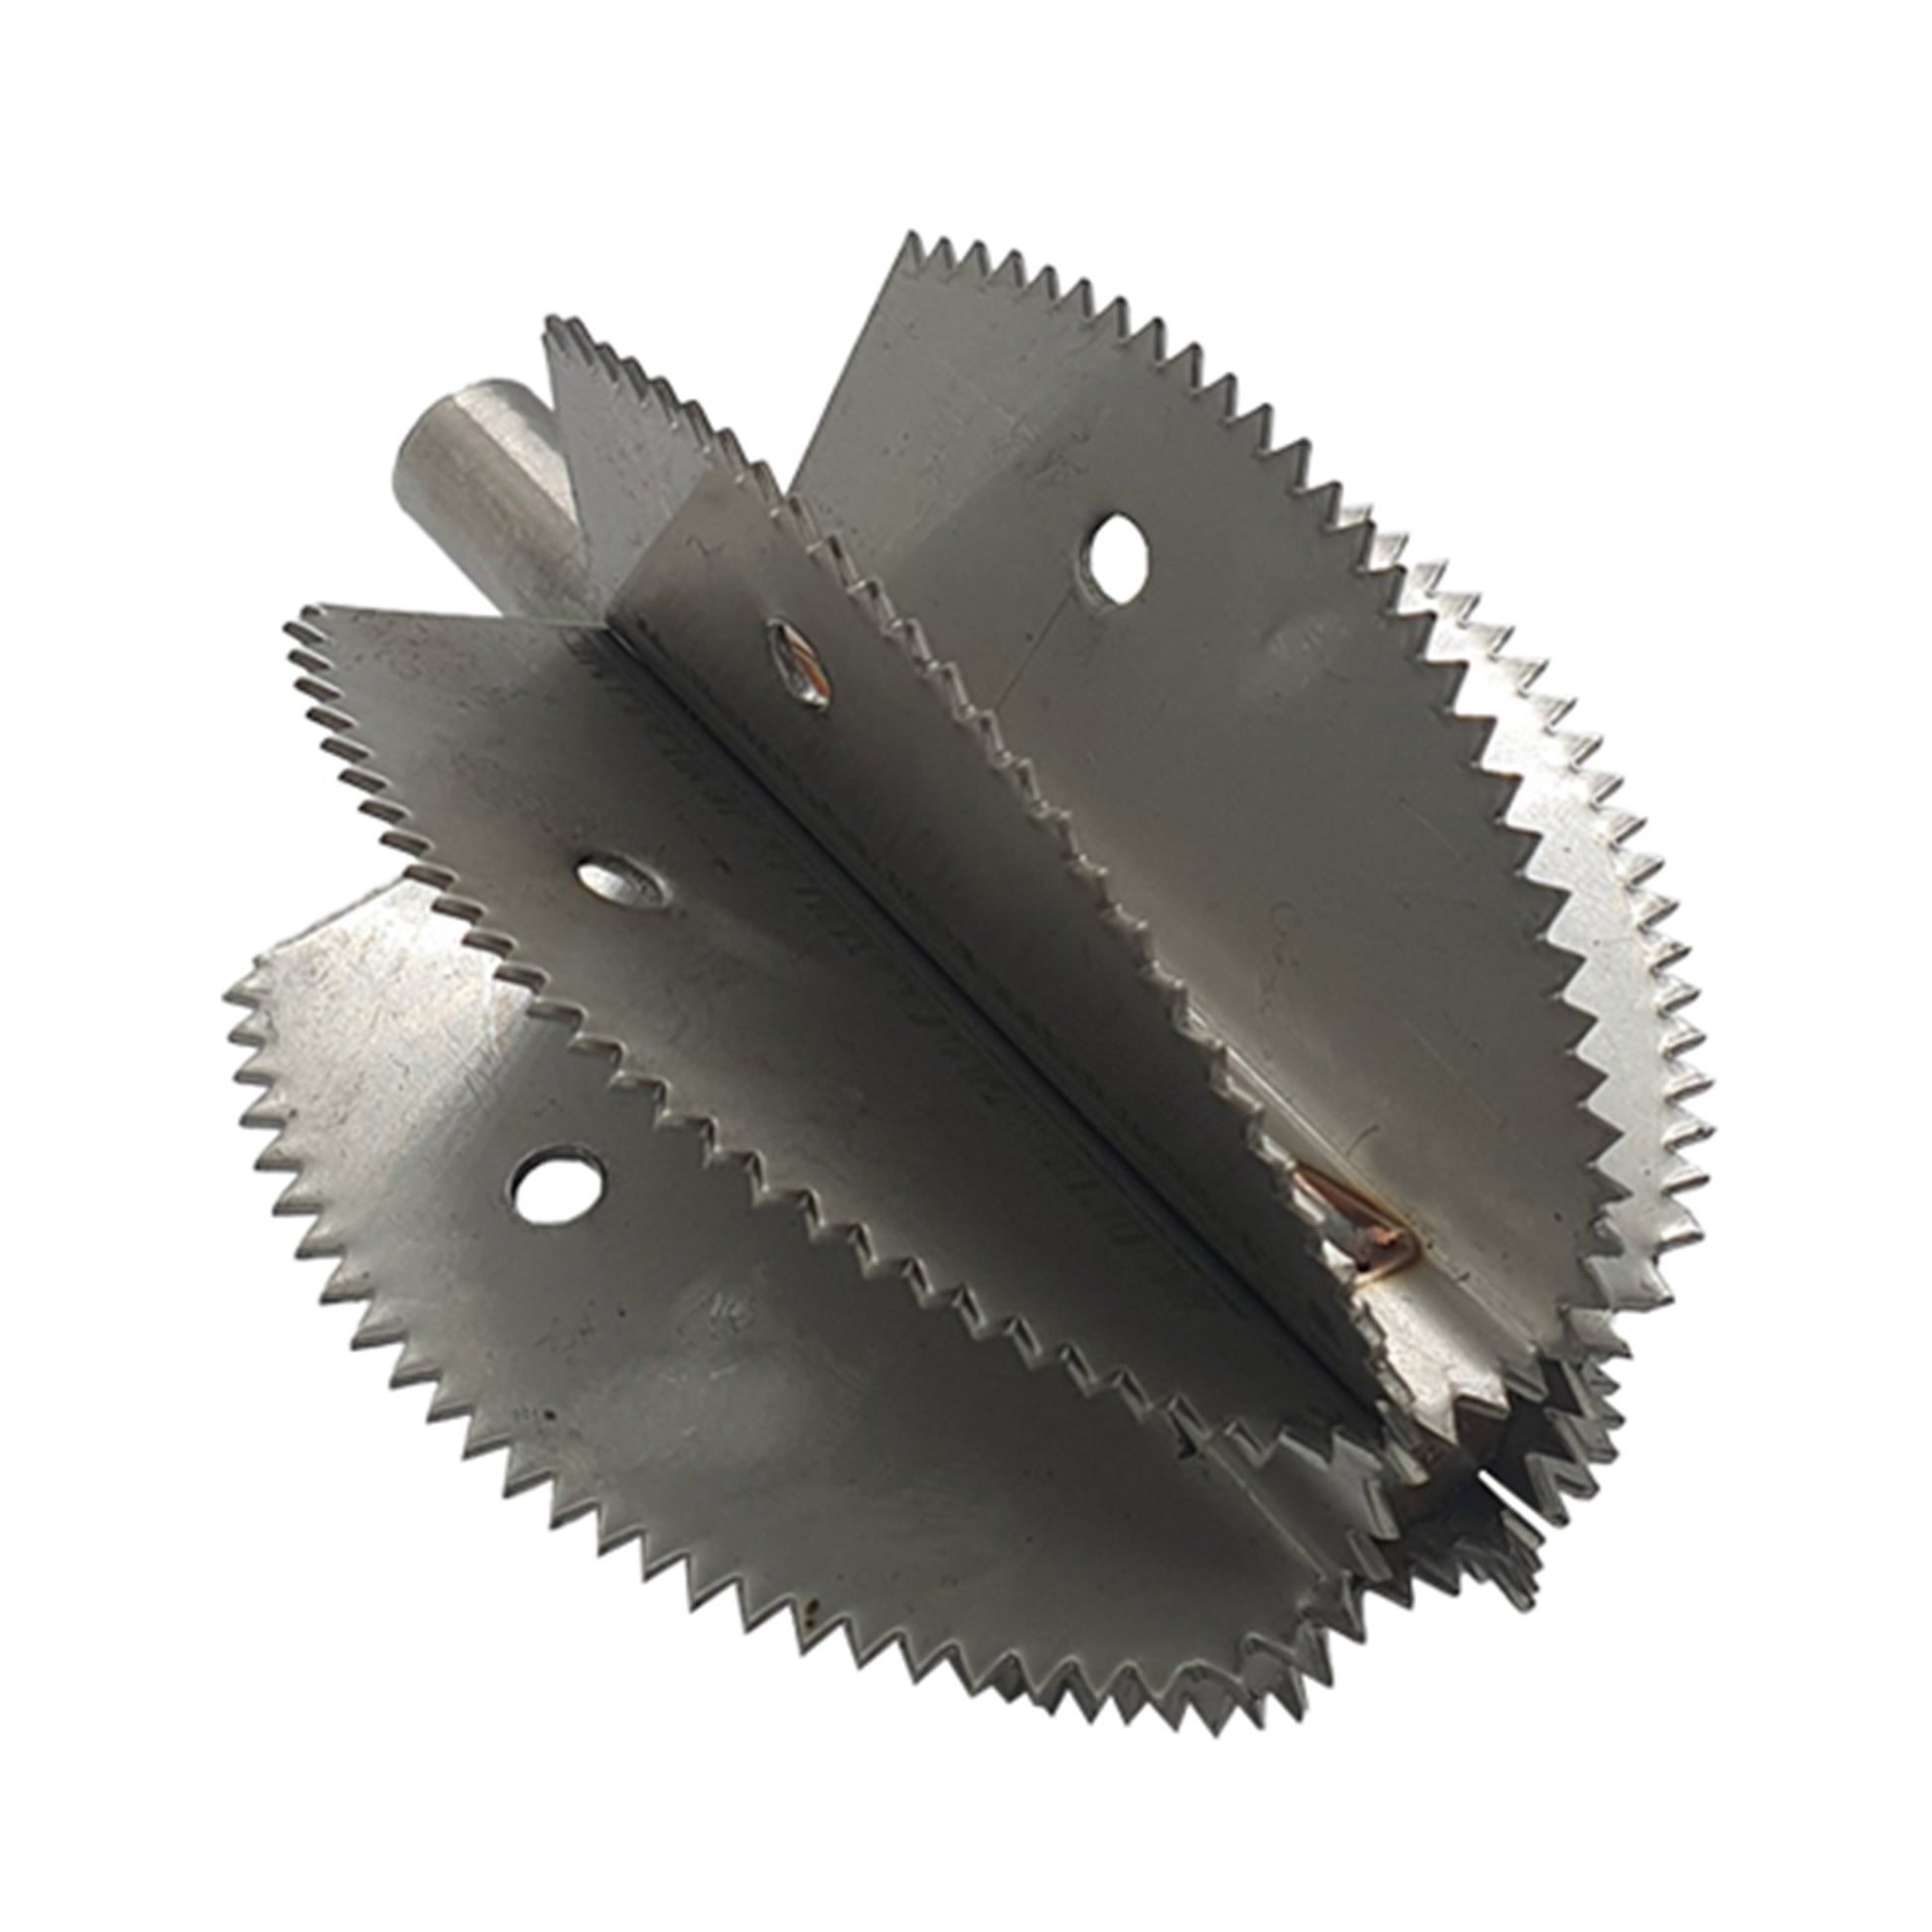 Coconut Grater Scraper Shredder ODIRIS- B5 Stainless Steel blades.